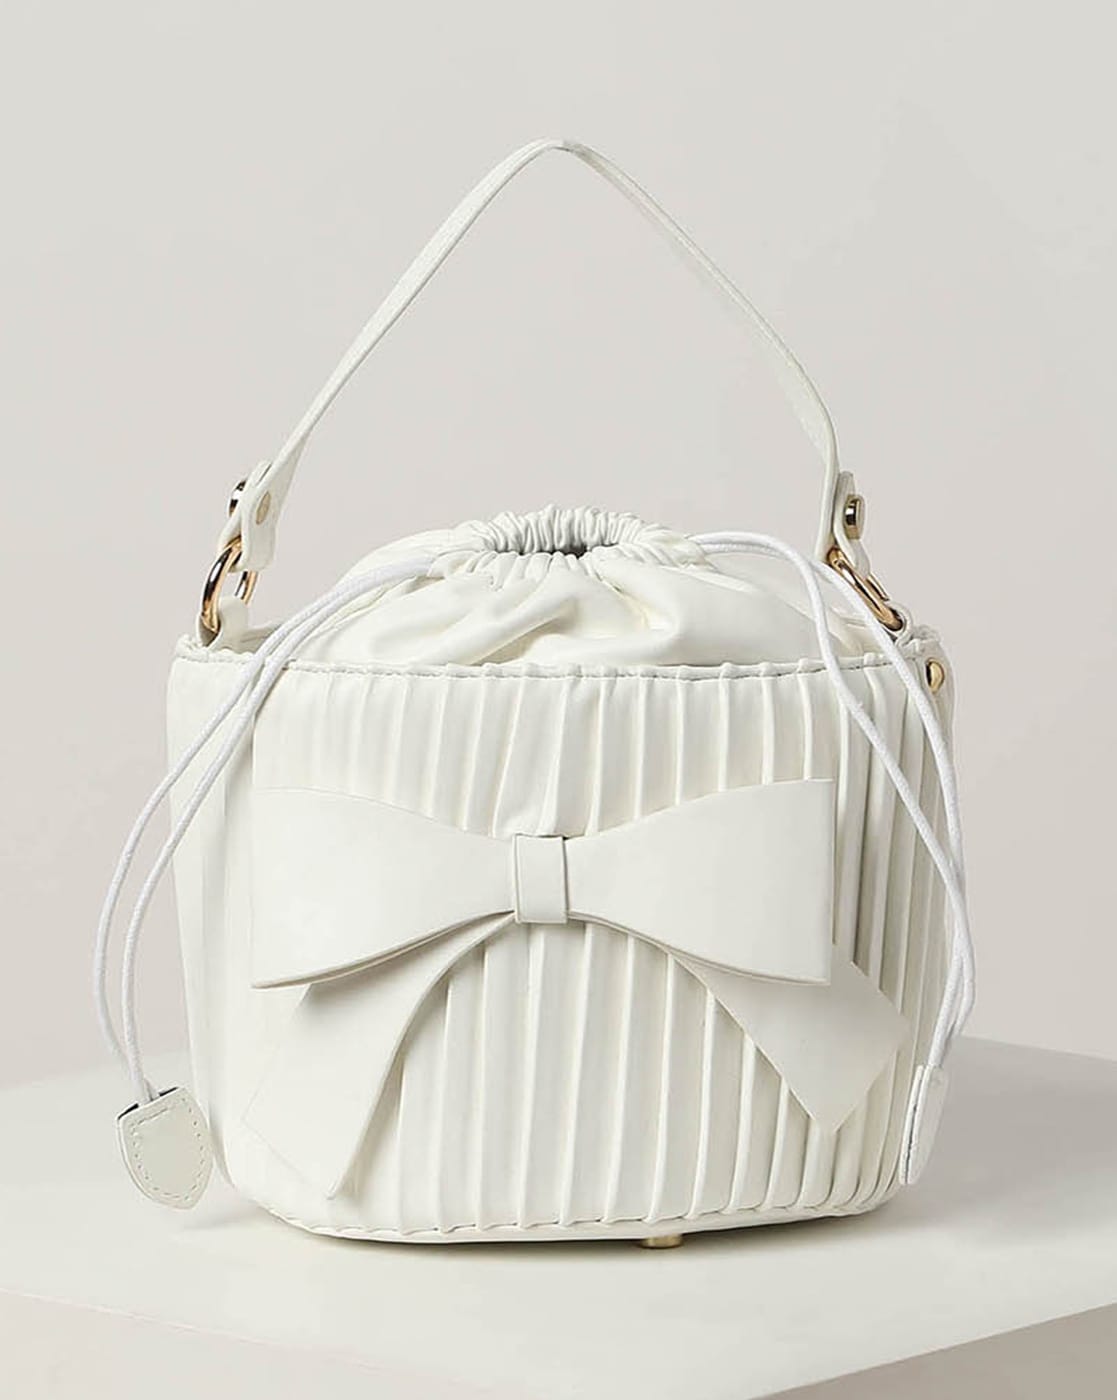 Is this designer bag white or blue? | Express.co.uk